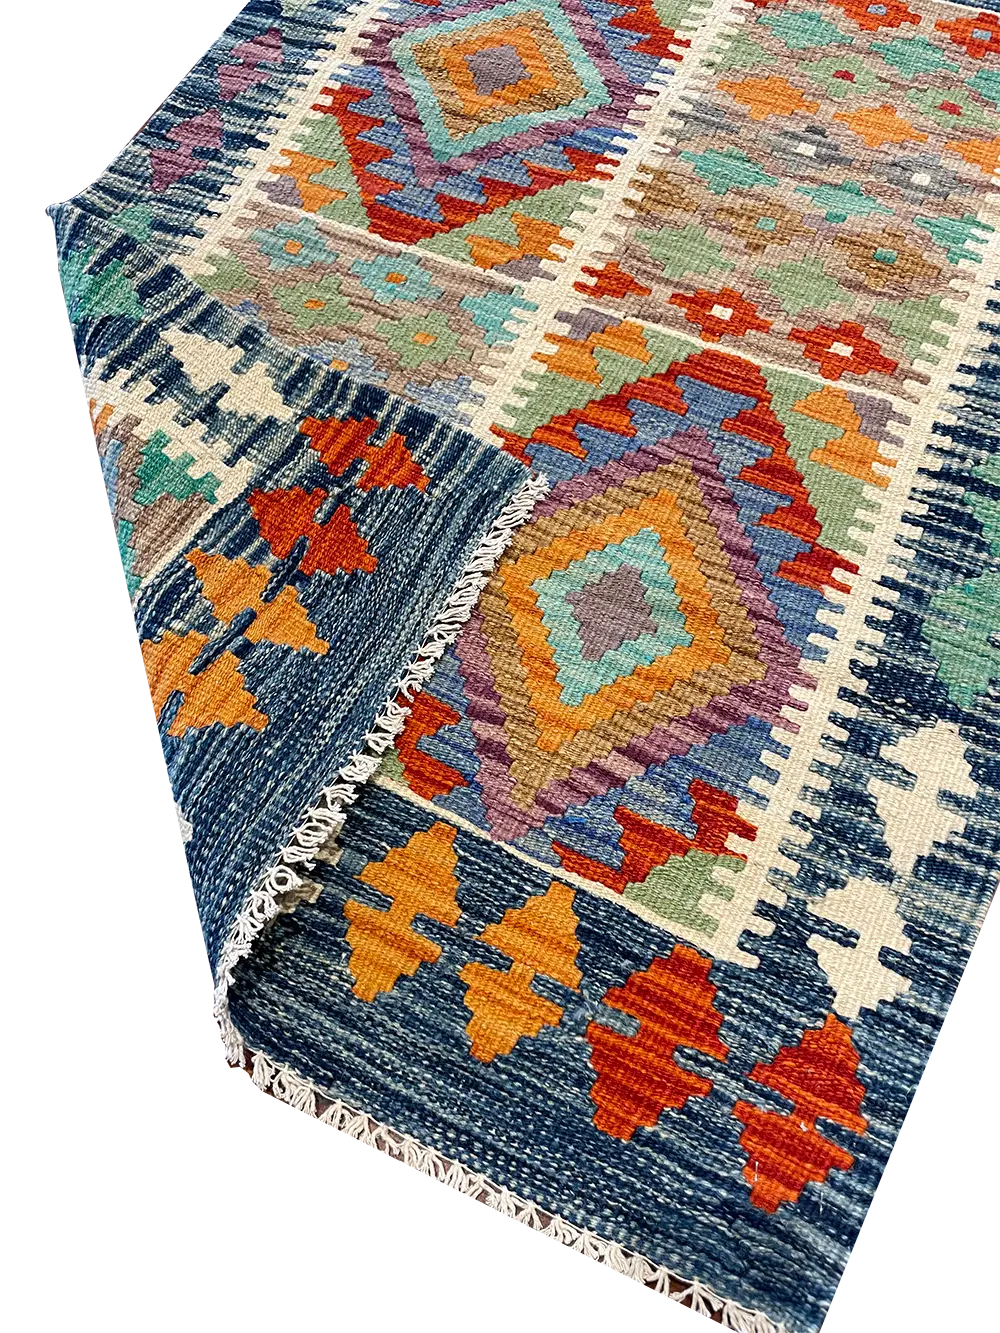 Colorful Handmade Kilim Rug 2'10" x 3'11"